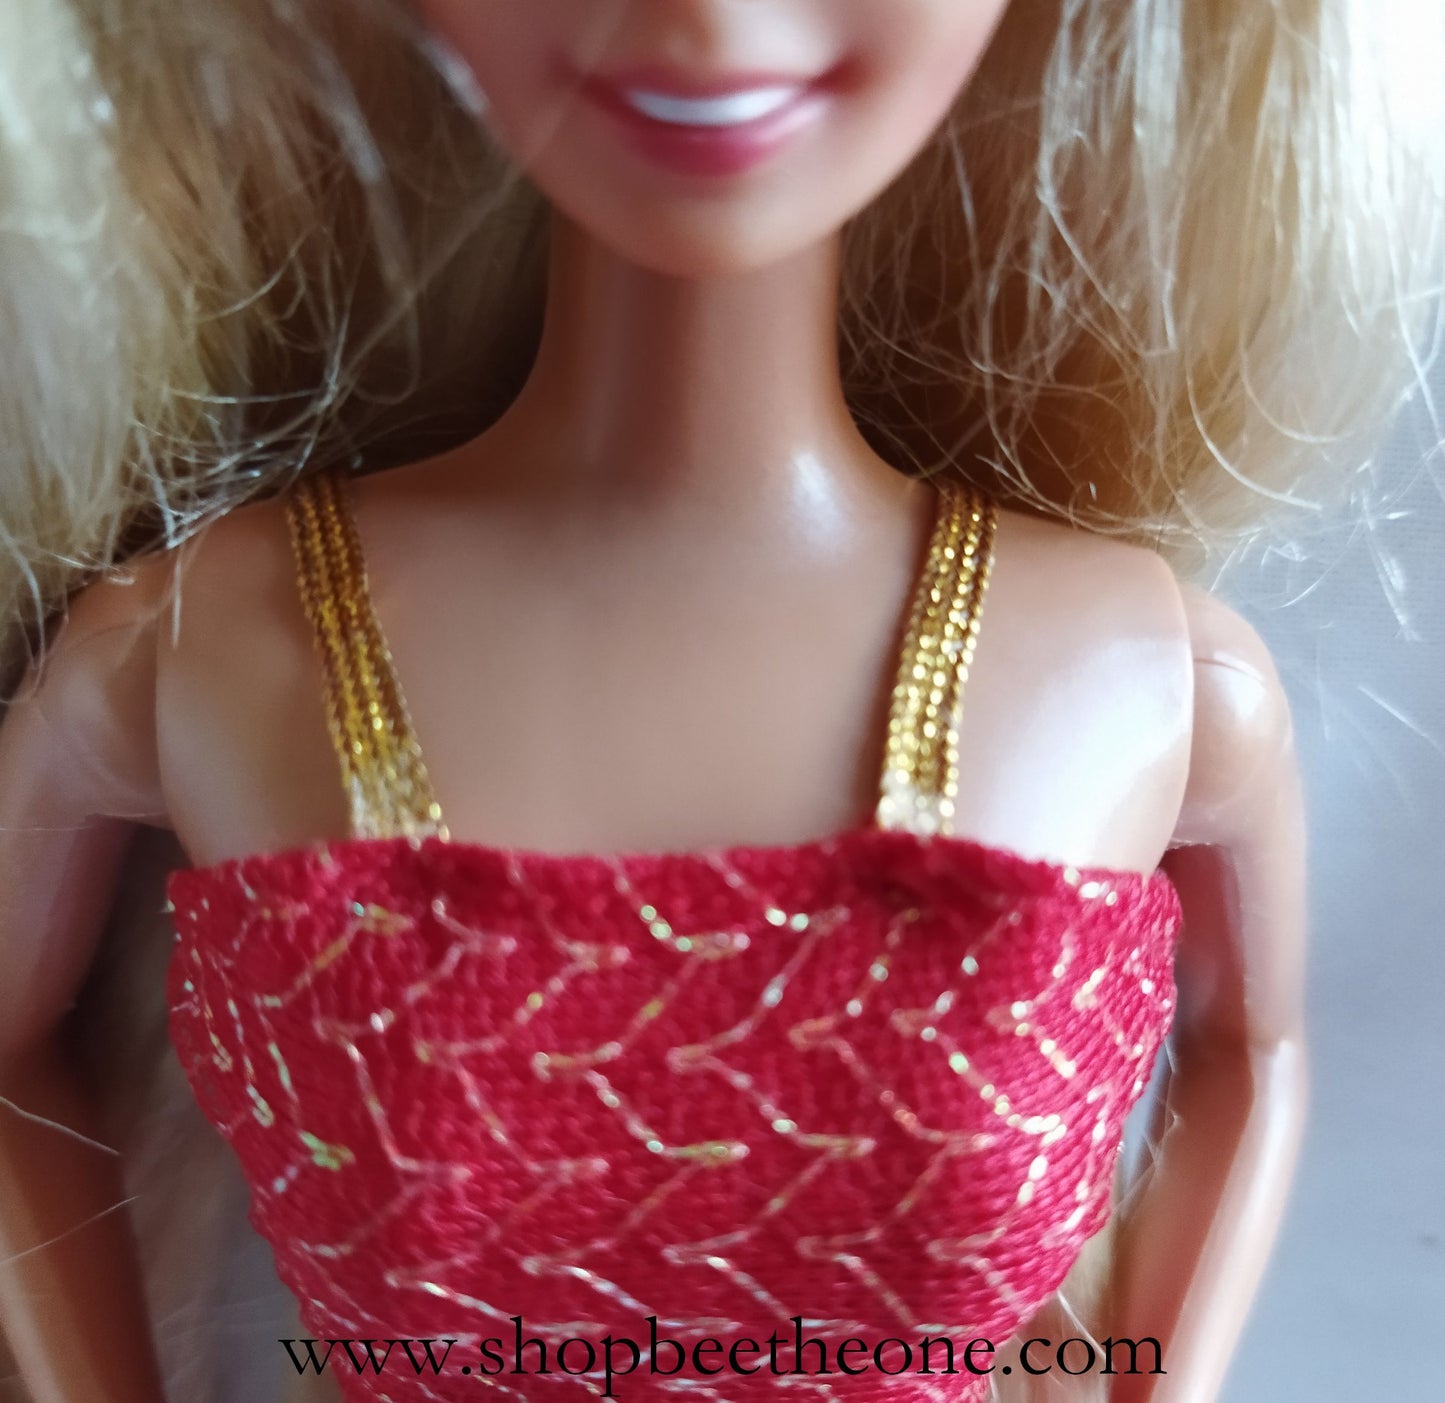 Barbie Habillage Collection Elégance (City Lights Fashions) #864 "rouge" - Mattel 1992 - Robe